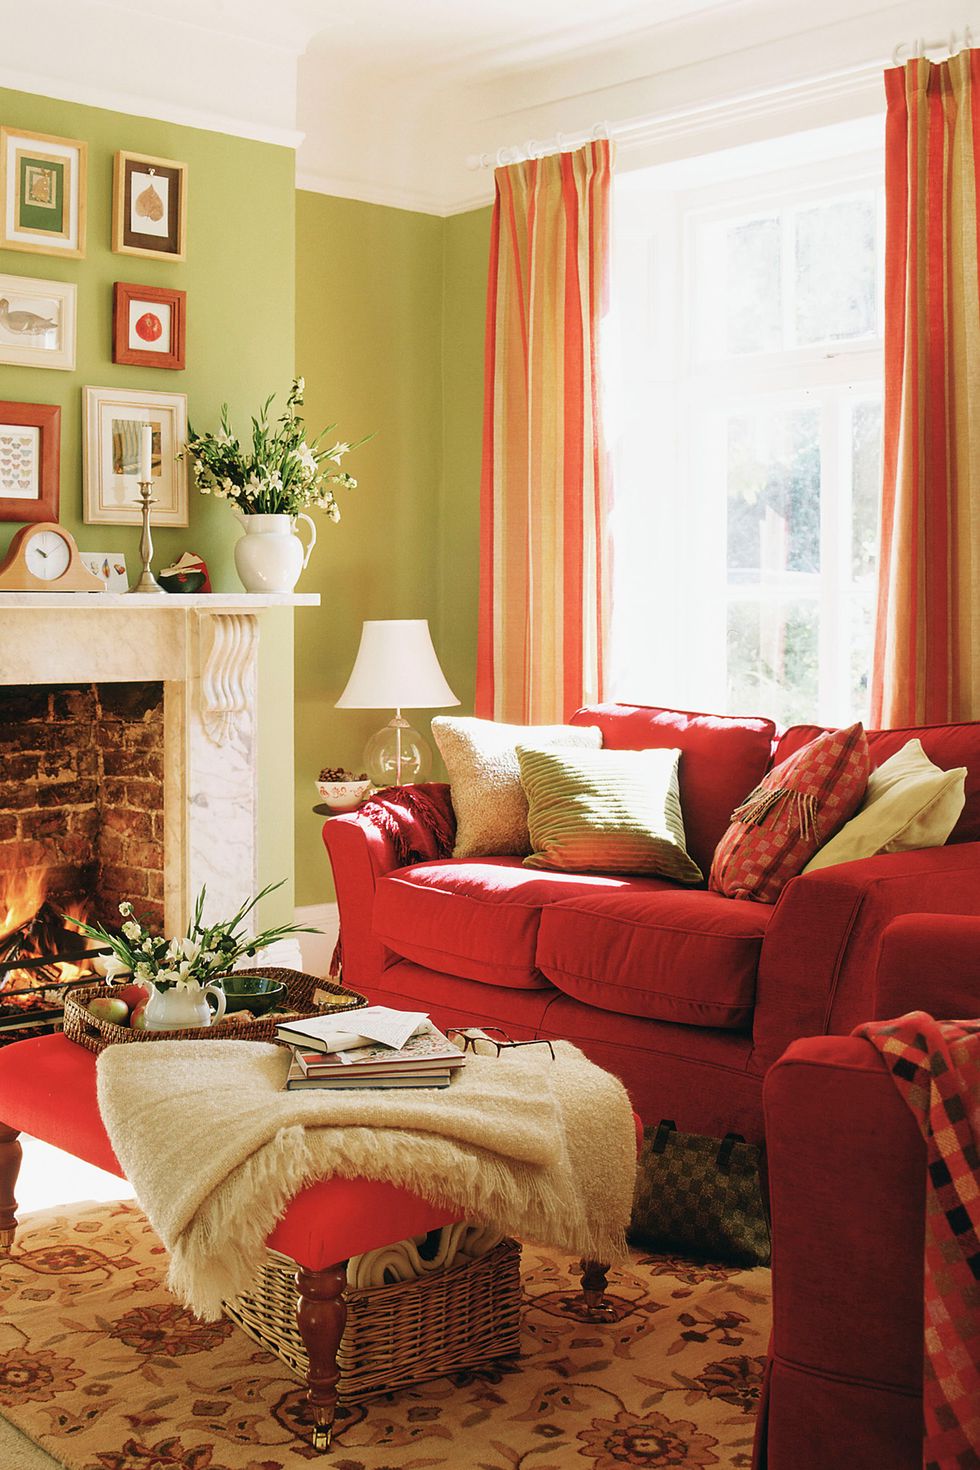 30 Beautiful Living Room Curtain Ideas